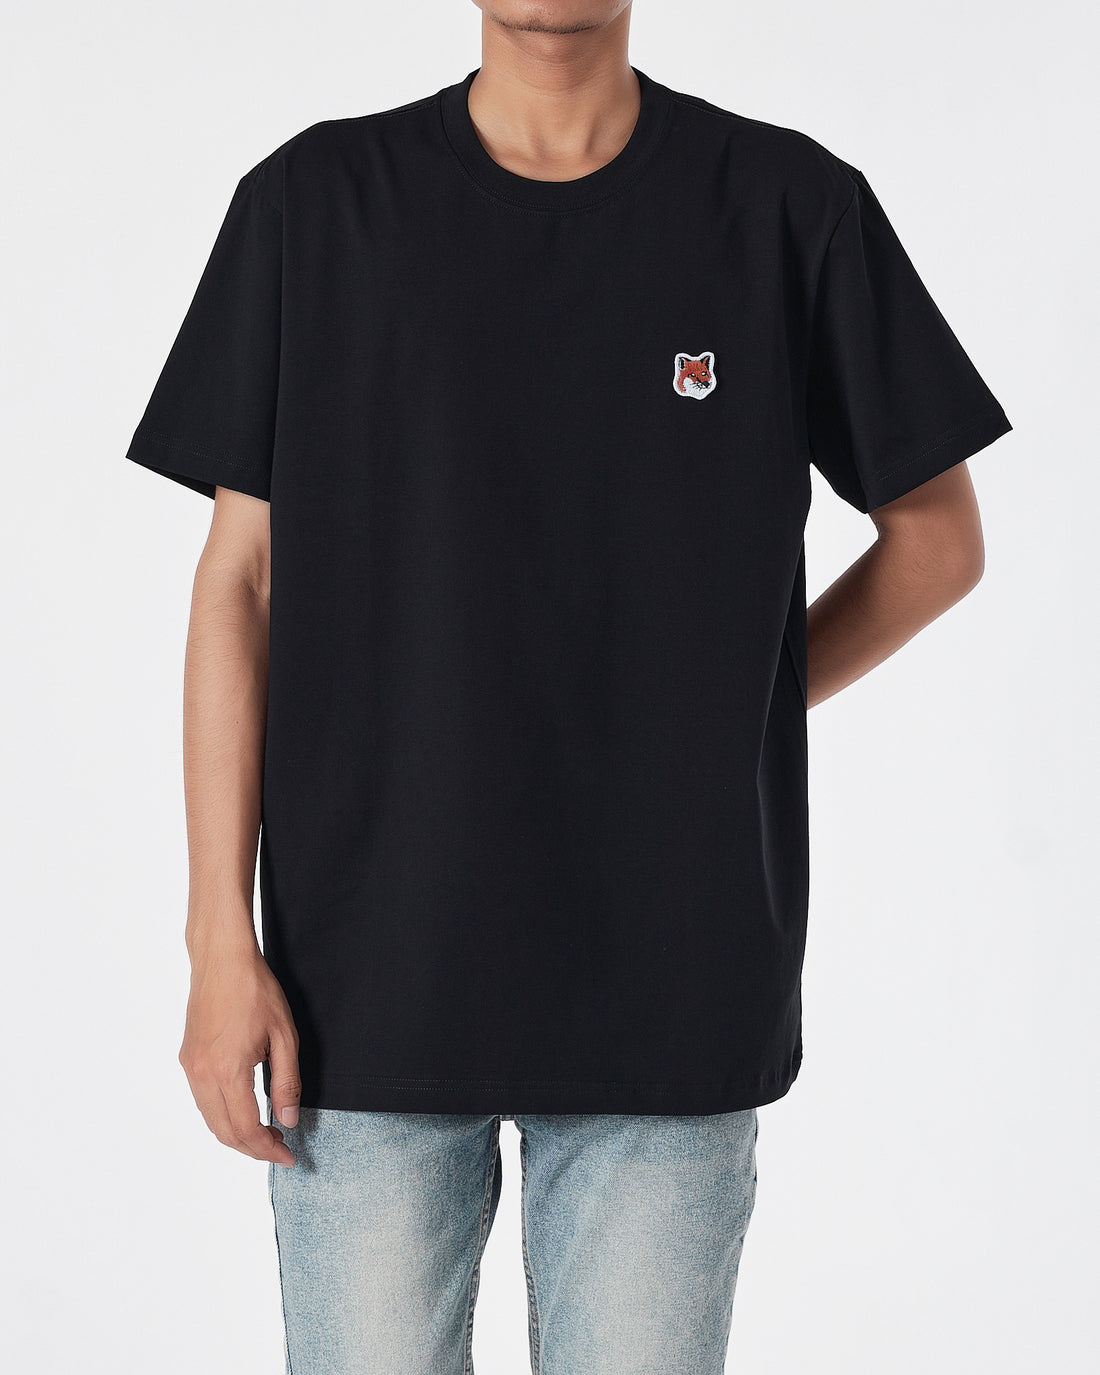 MKI Fox Embroidered Men Black T-Shirt 14.90